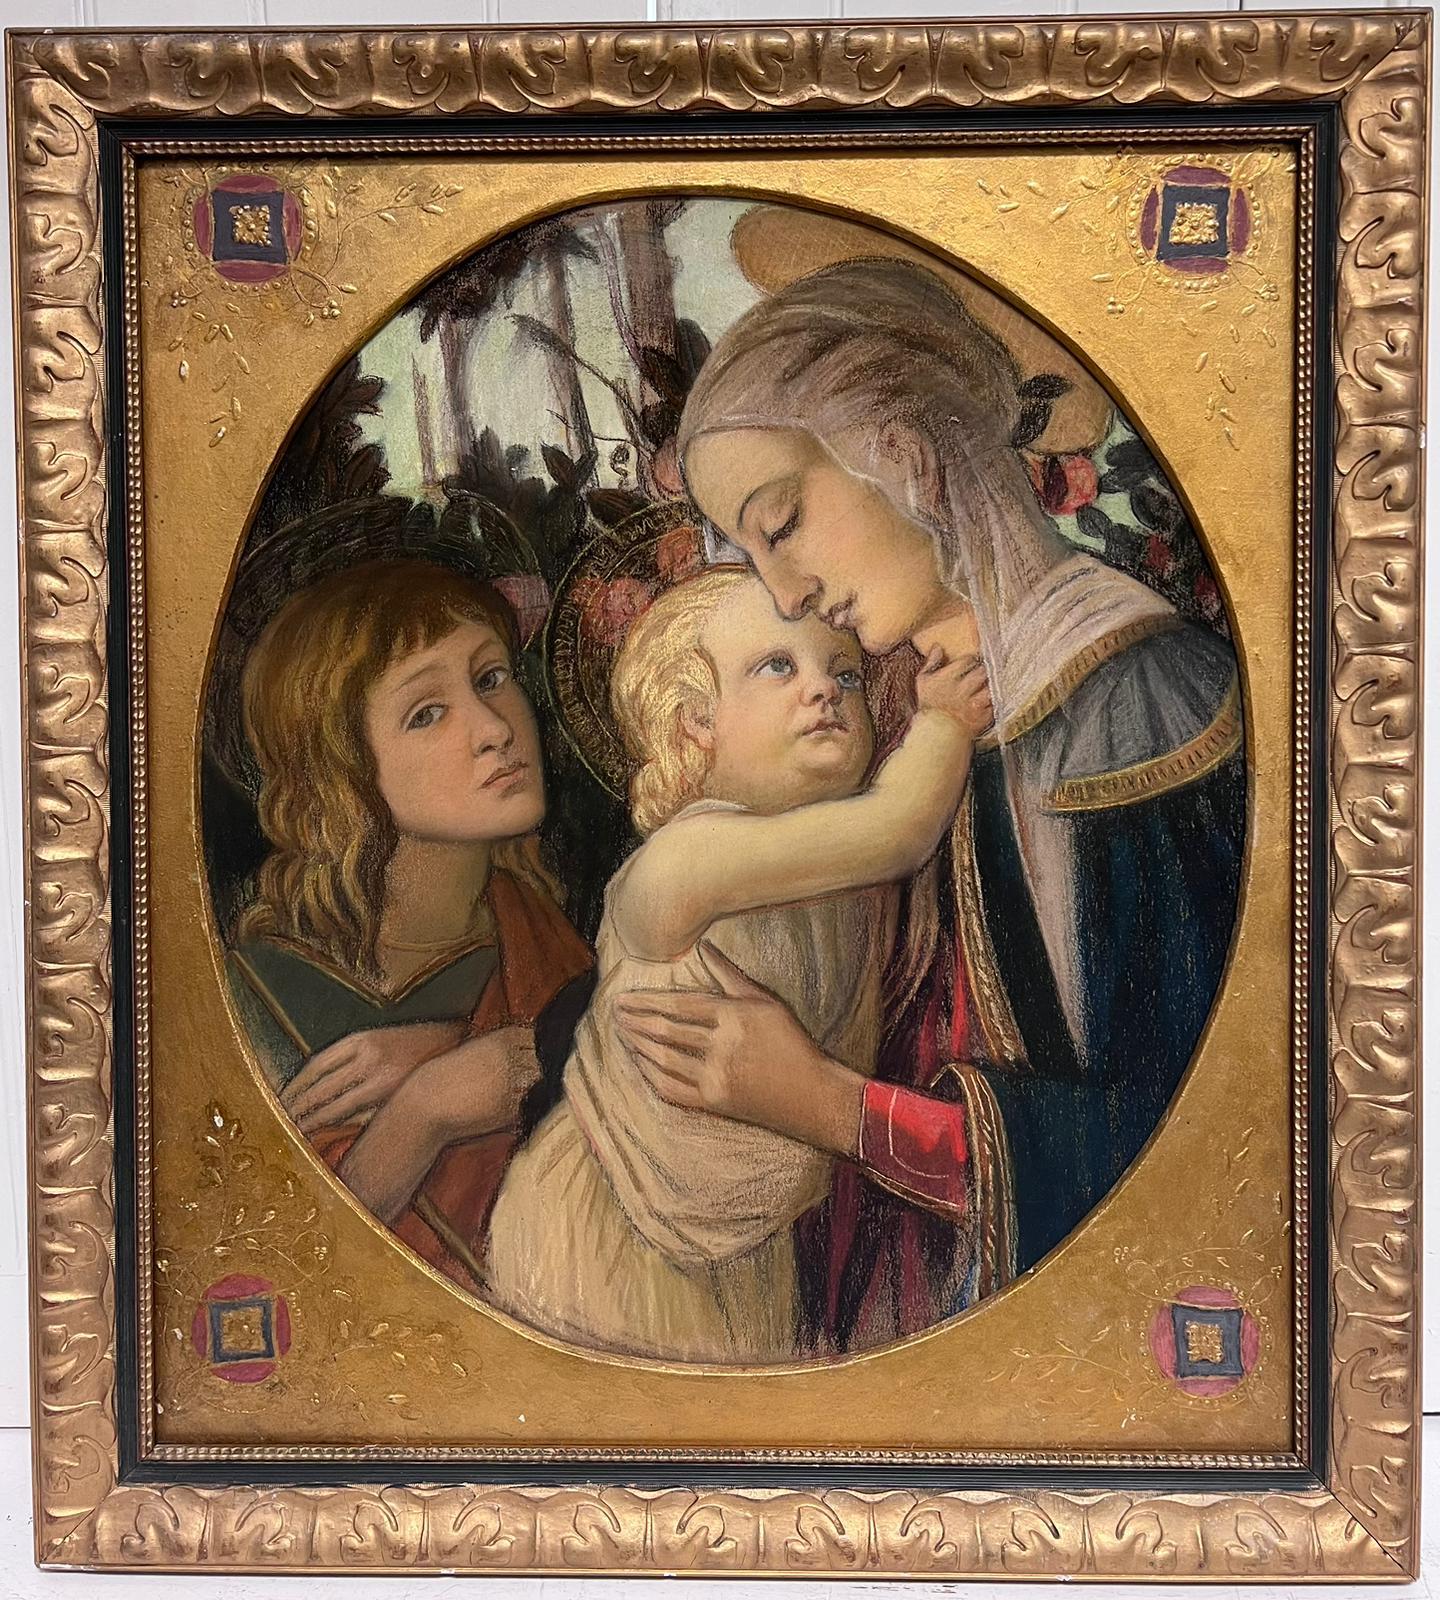 The Madonna with Christ Child & St. John the Baptist Renaissance Masterpiece - Painting by Italian Renaissance